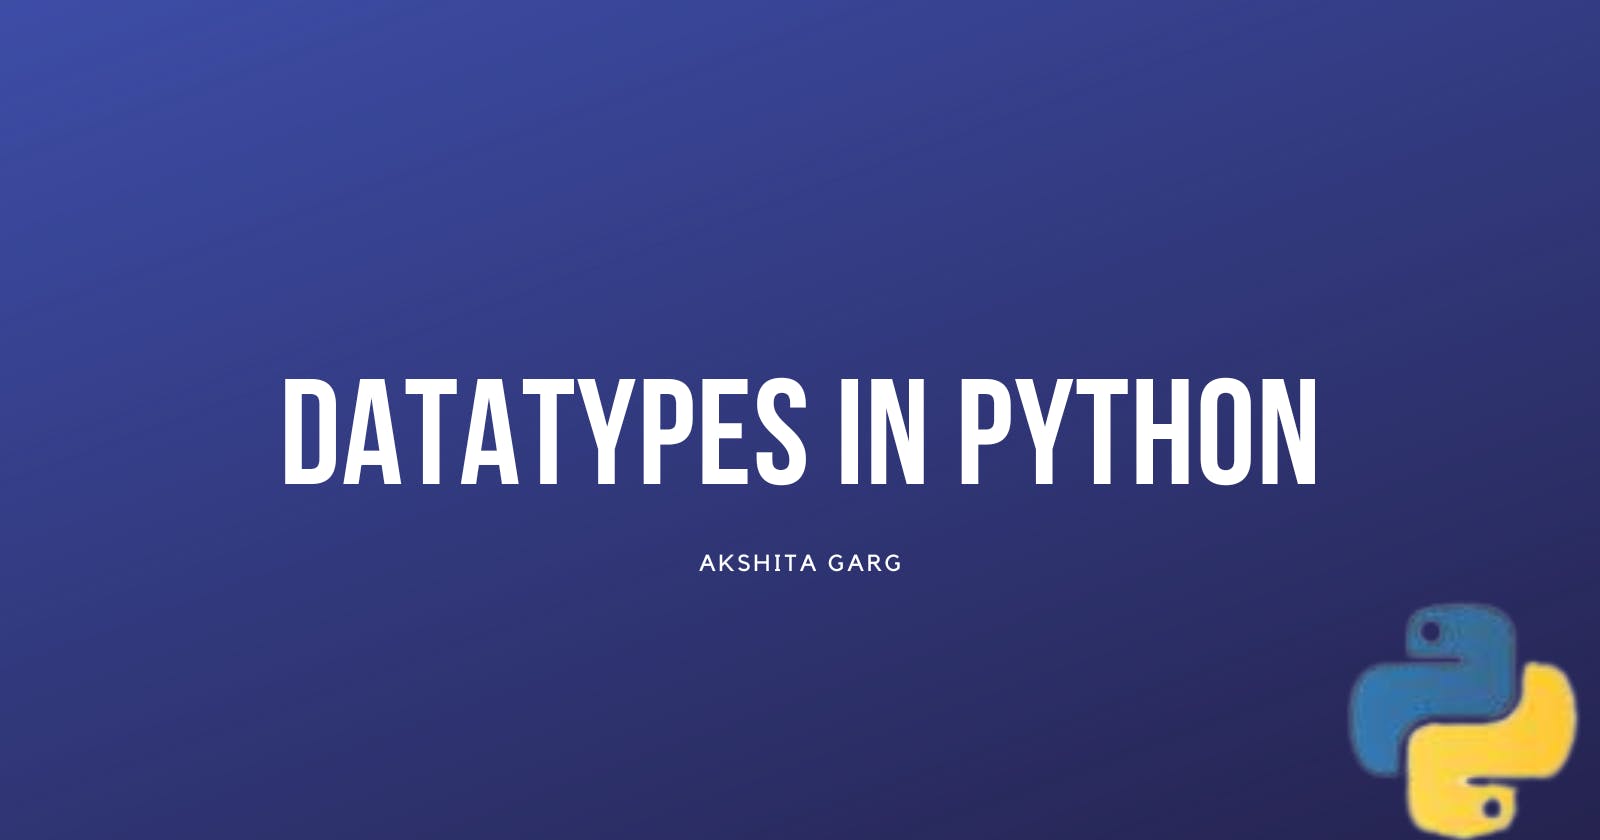 Datatypes in Python